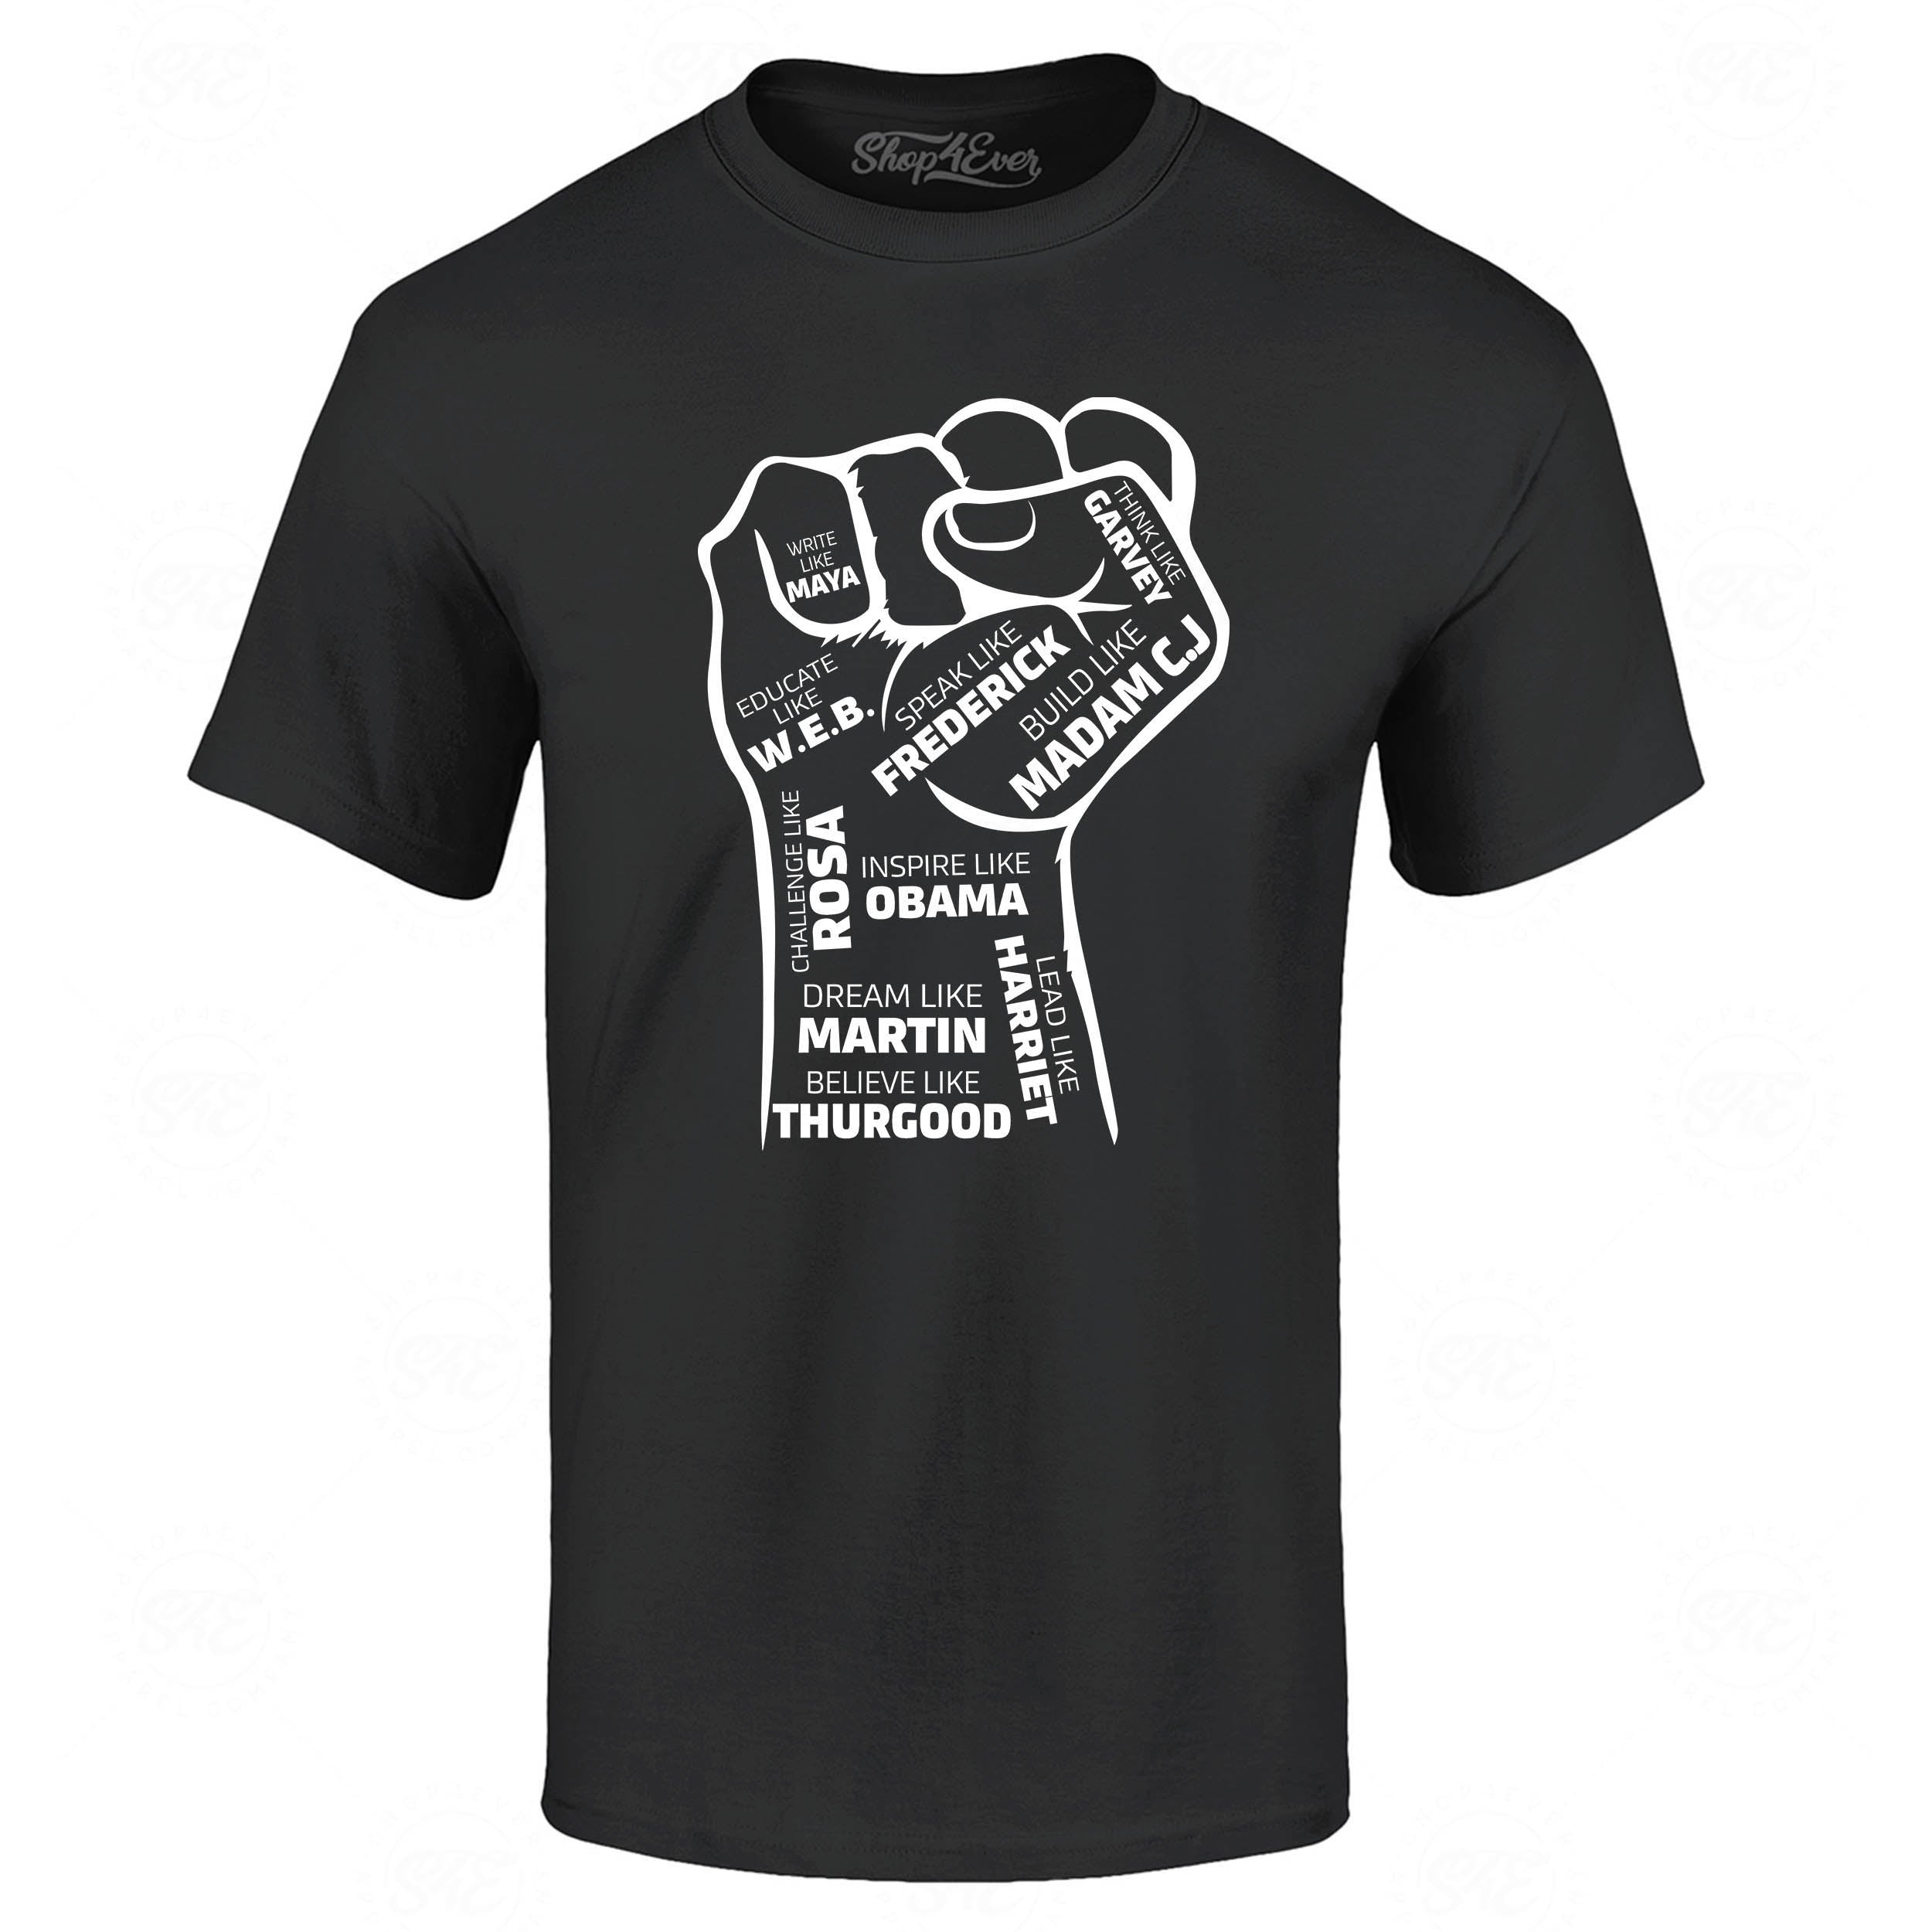 Inspiring Black Leaders Fist T-Shirt